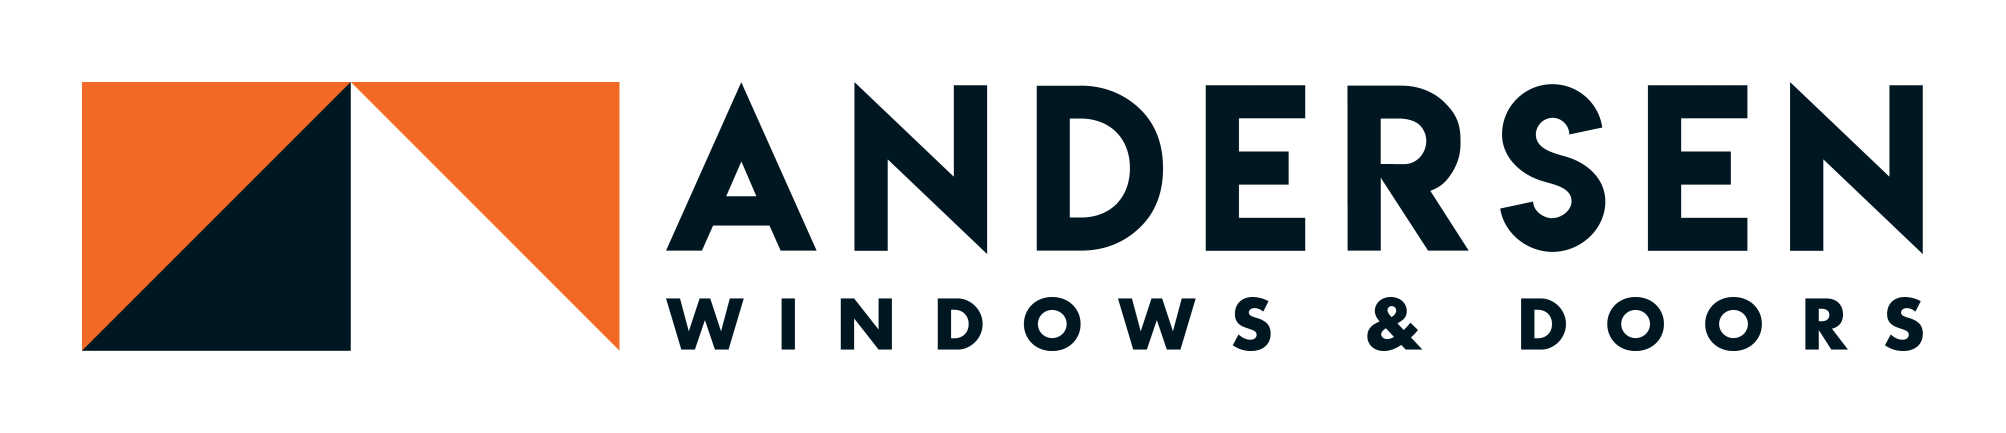 Orange and black logo that reads Andersen Windows & Doors